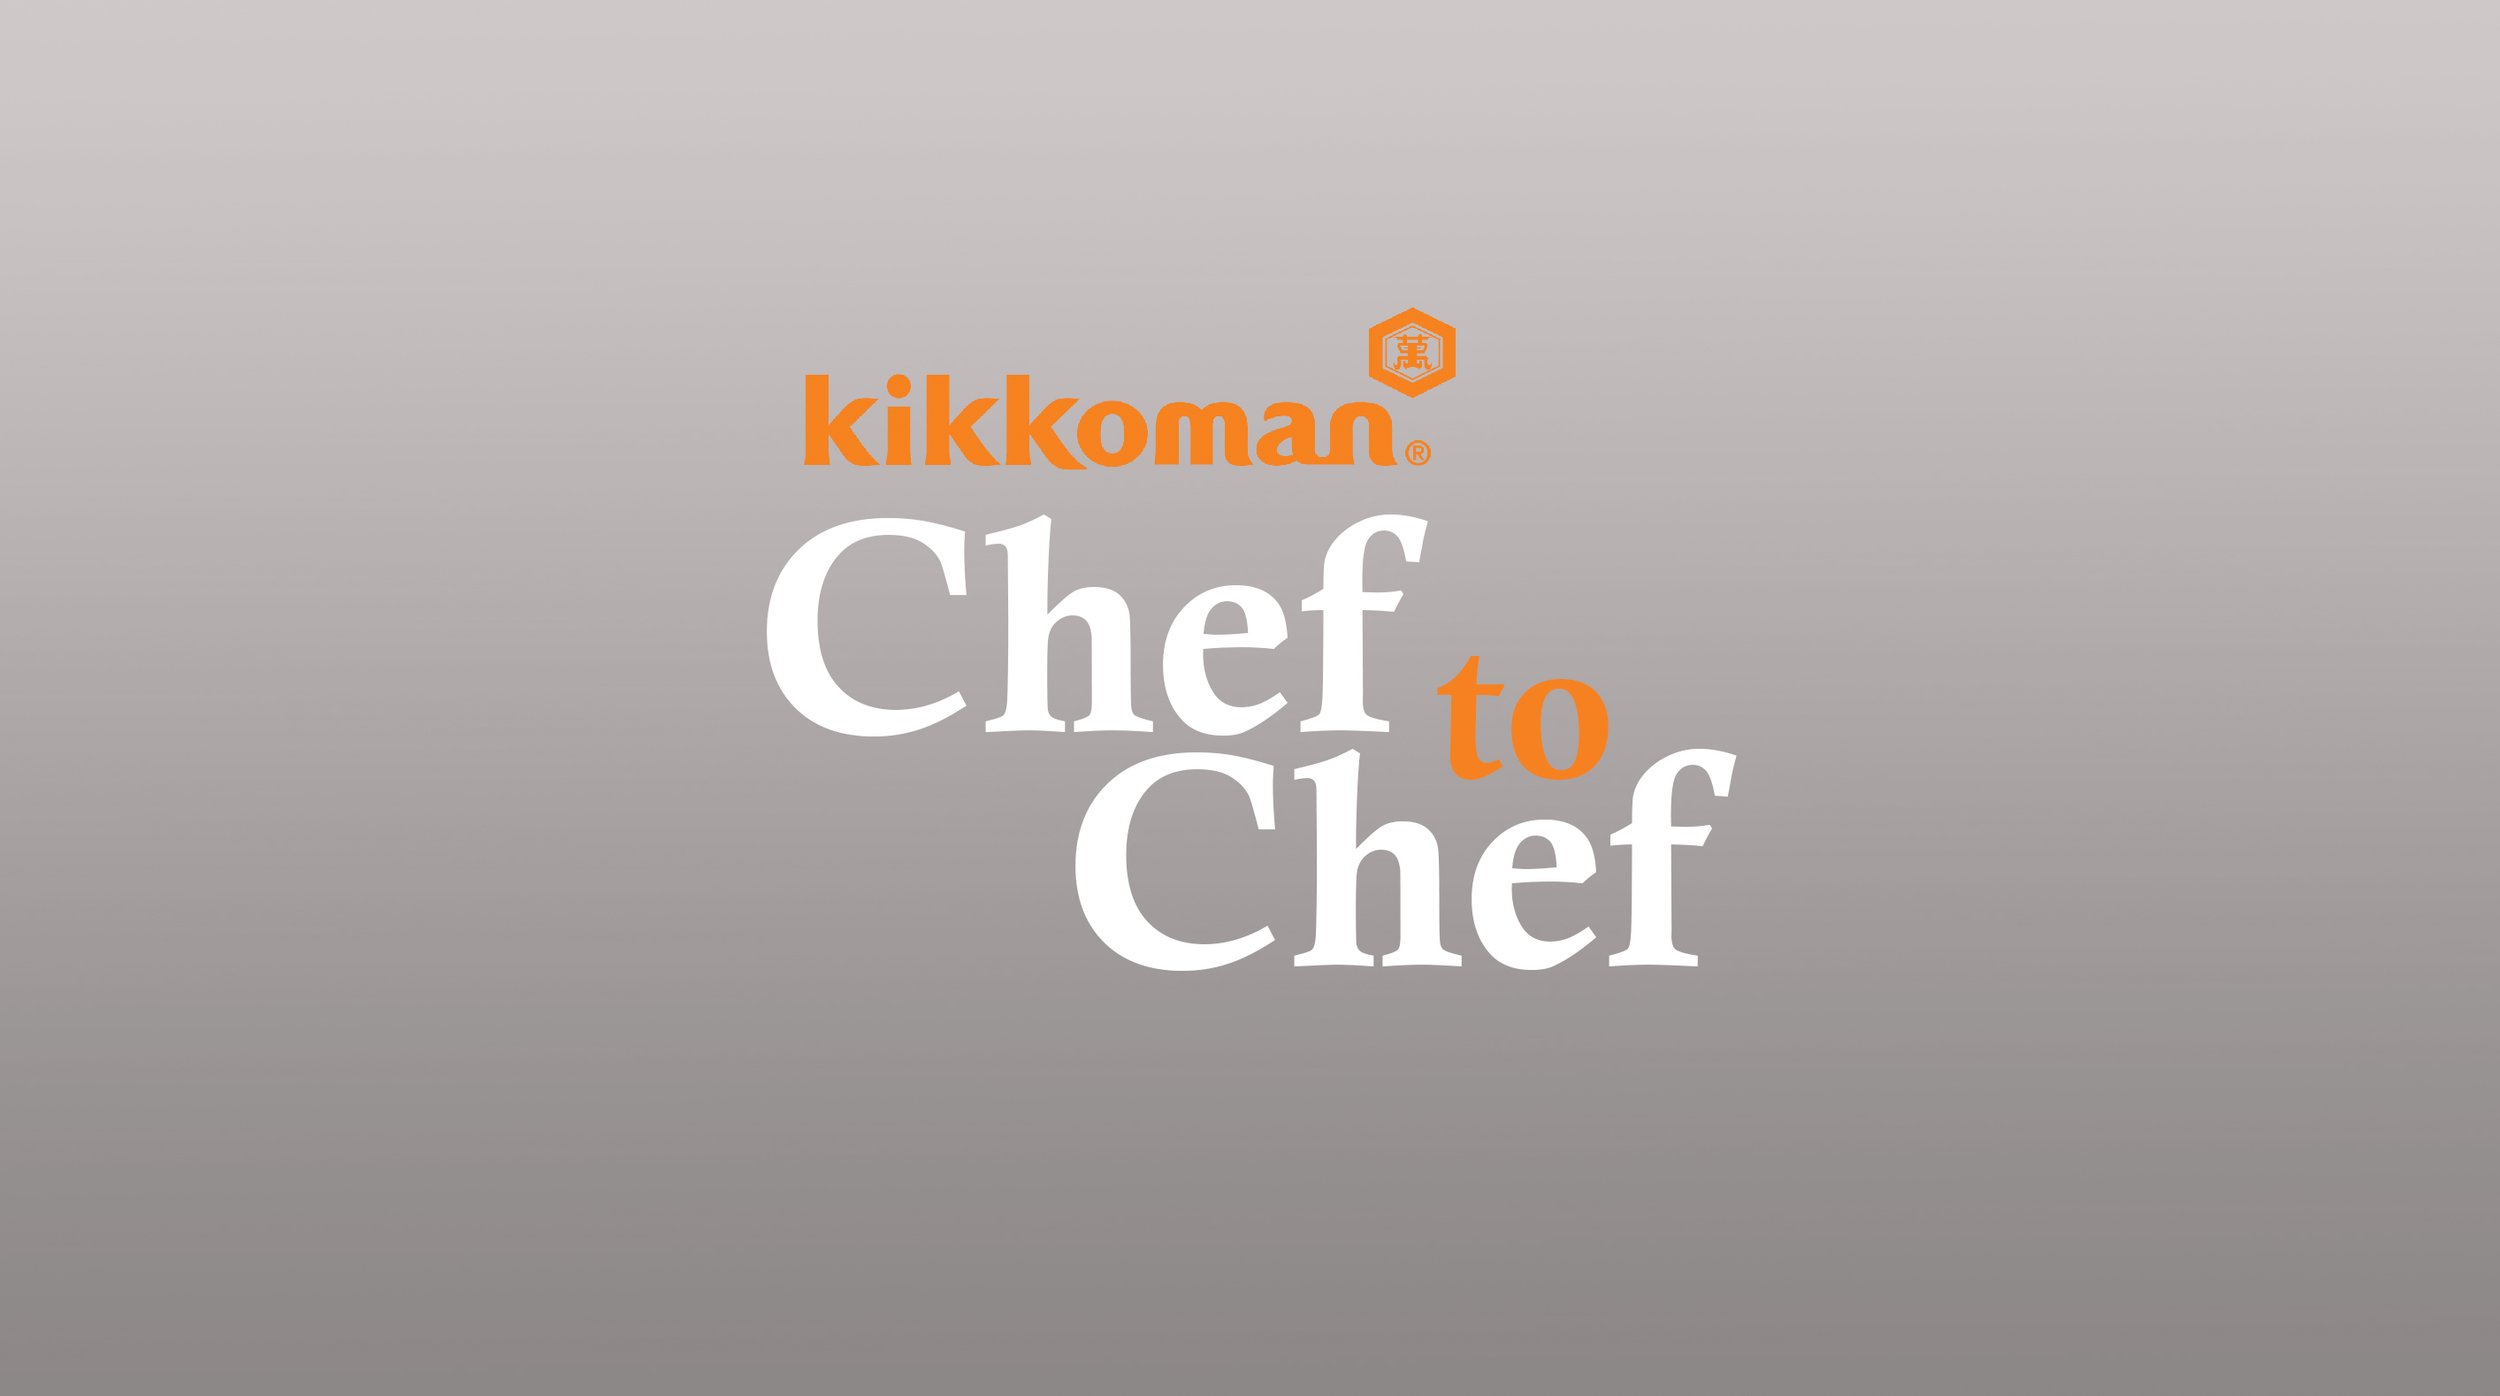 kikkoman-chef-to-chef.jpg